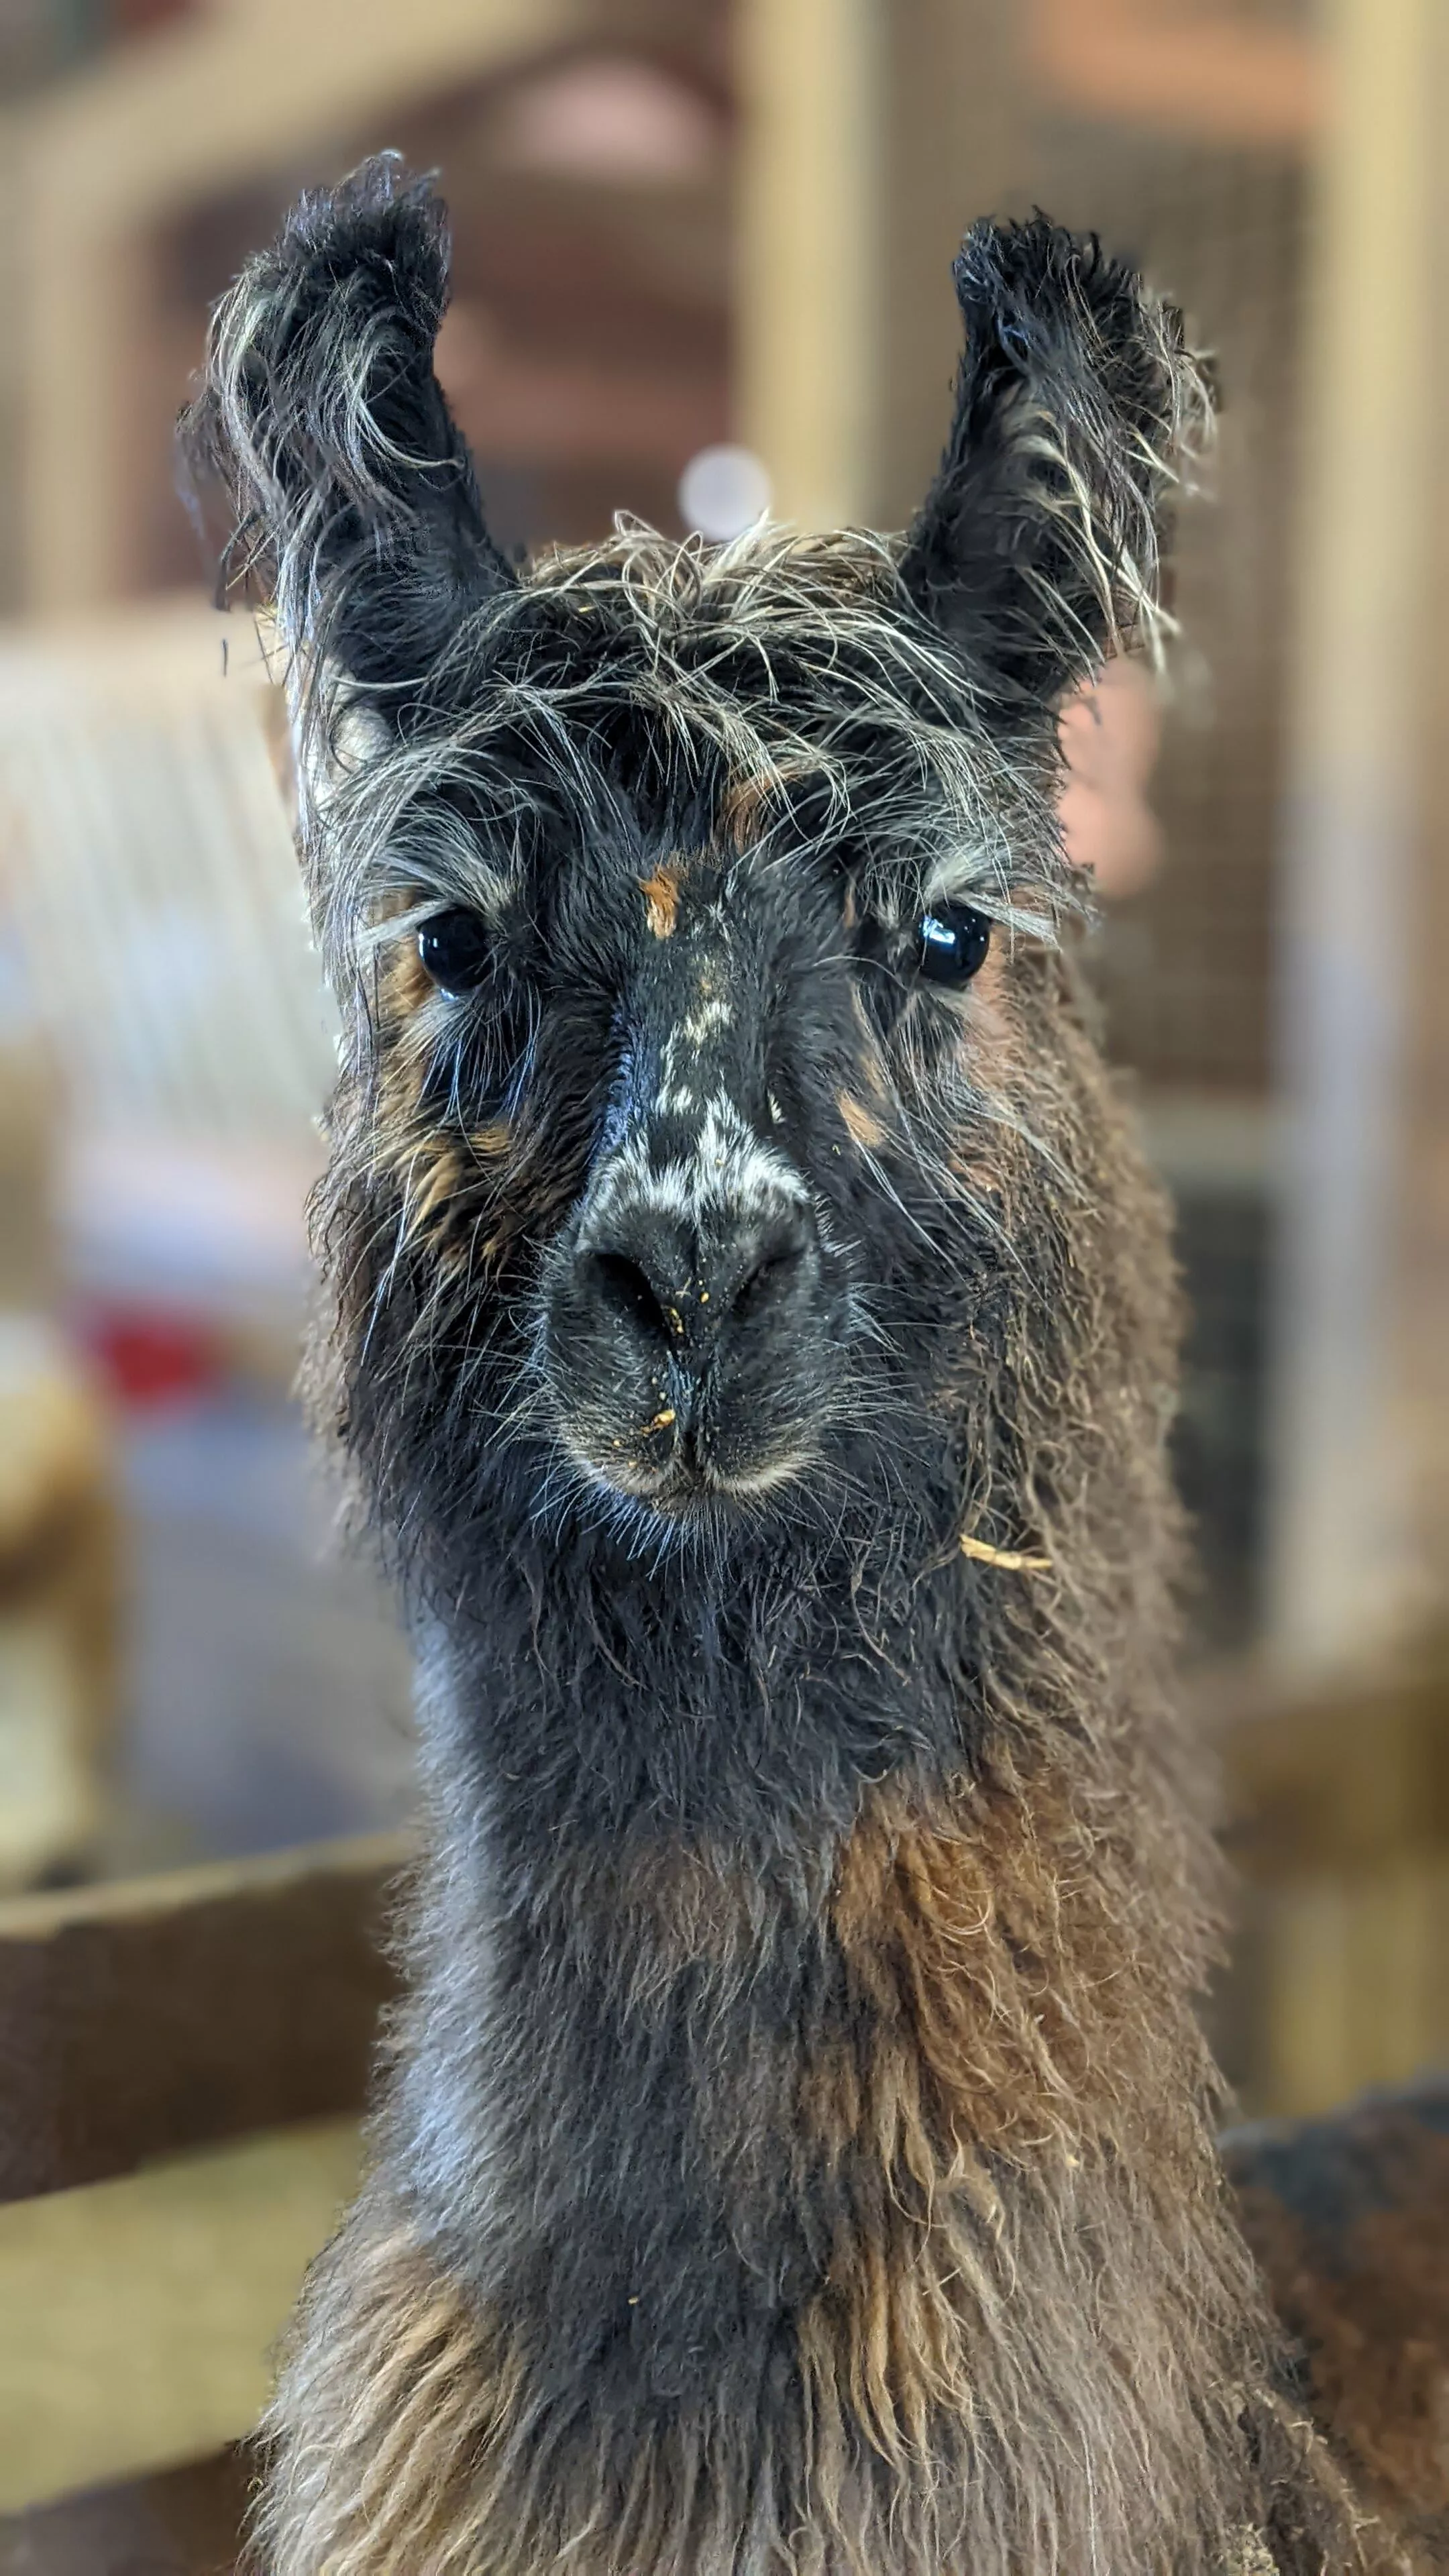 A portrait image of a llama named Florian